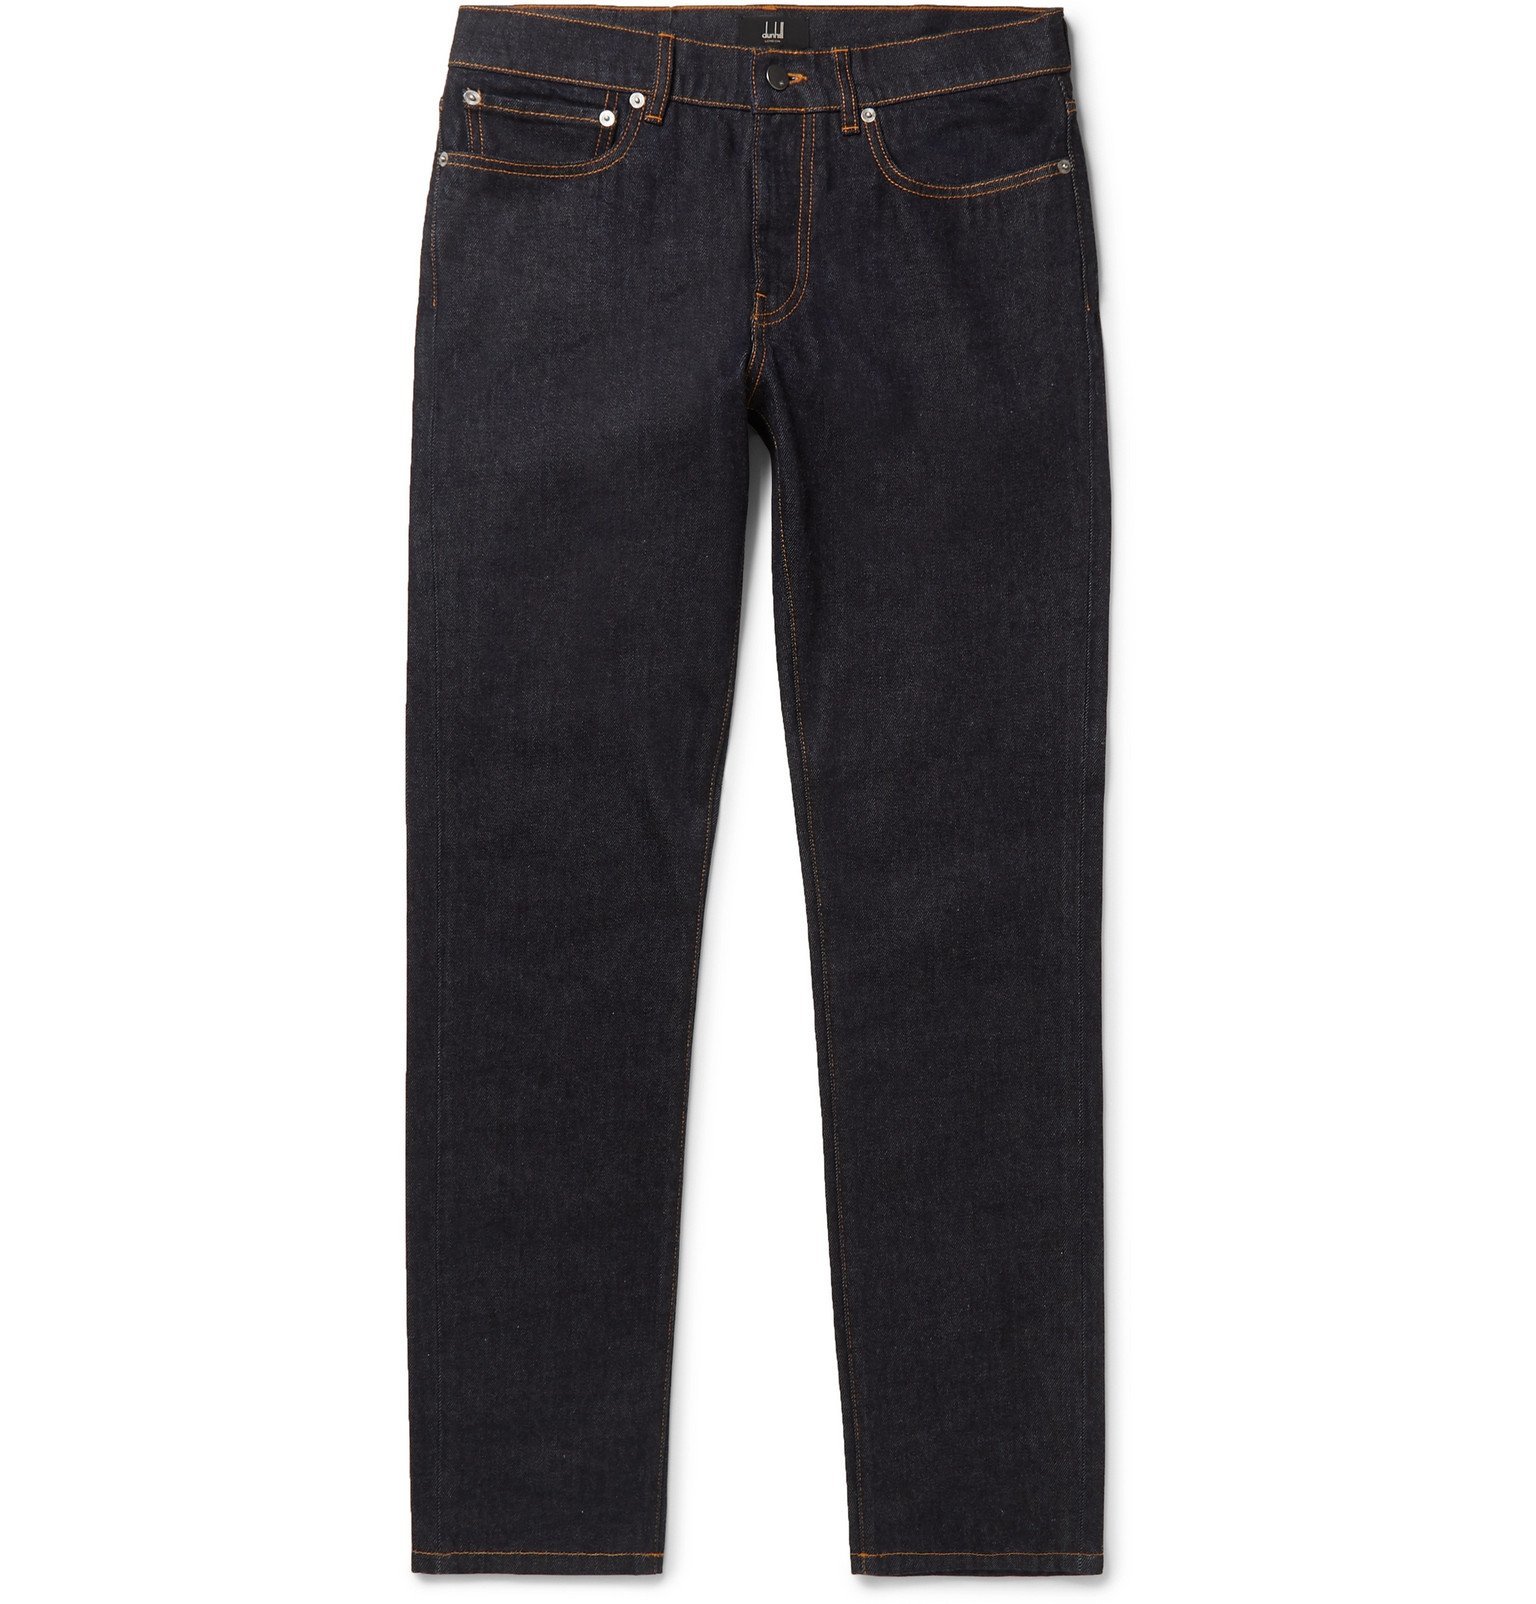 Dunhill - Slim-Fit Denim Jeans - Blue Dunhill